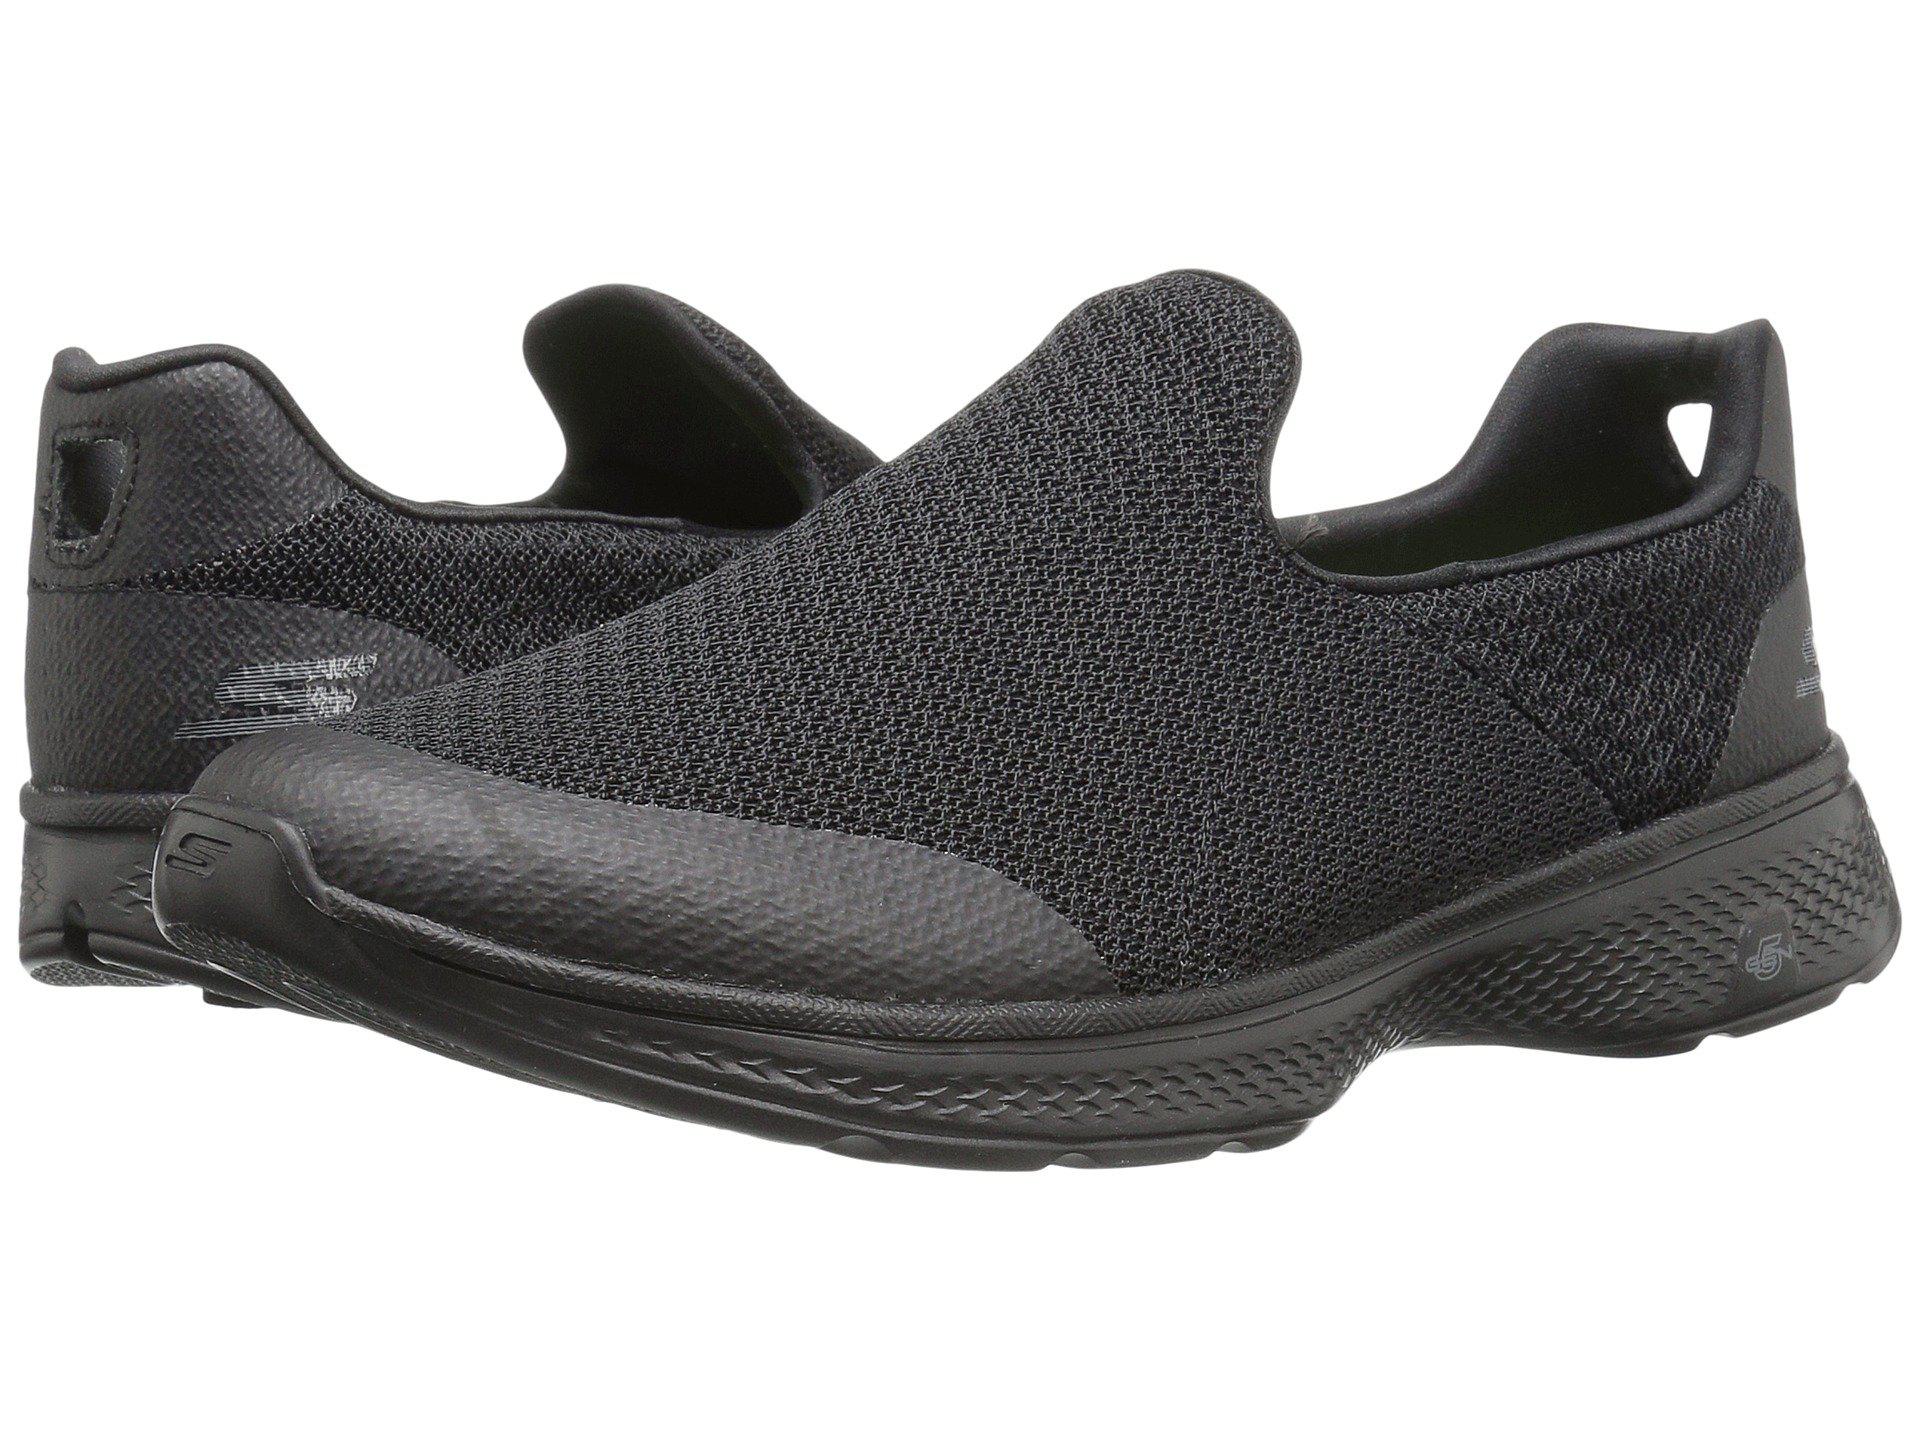 Skechers Synthetic Performance Go Walk 4 Expert Walking Shoe in Black ...